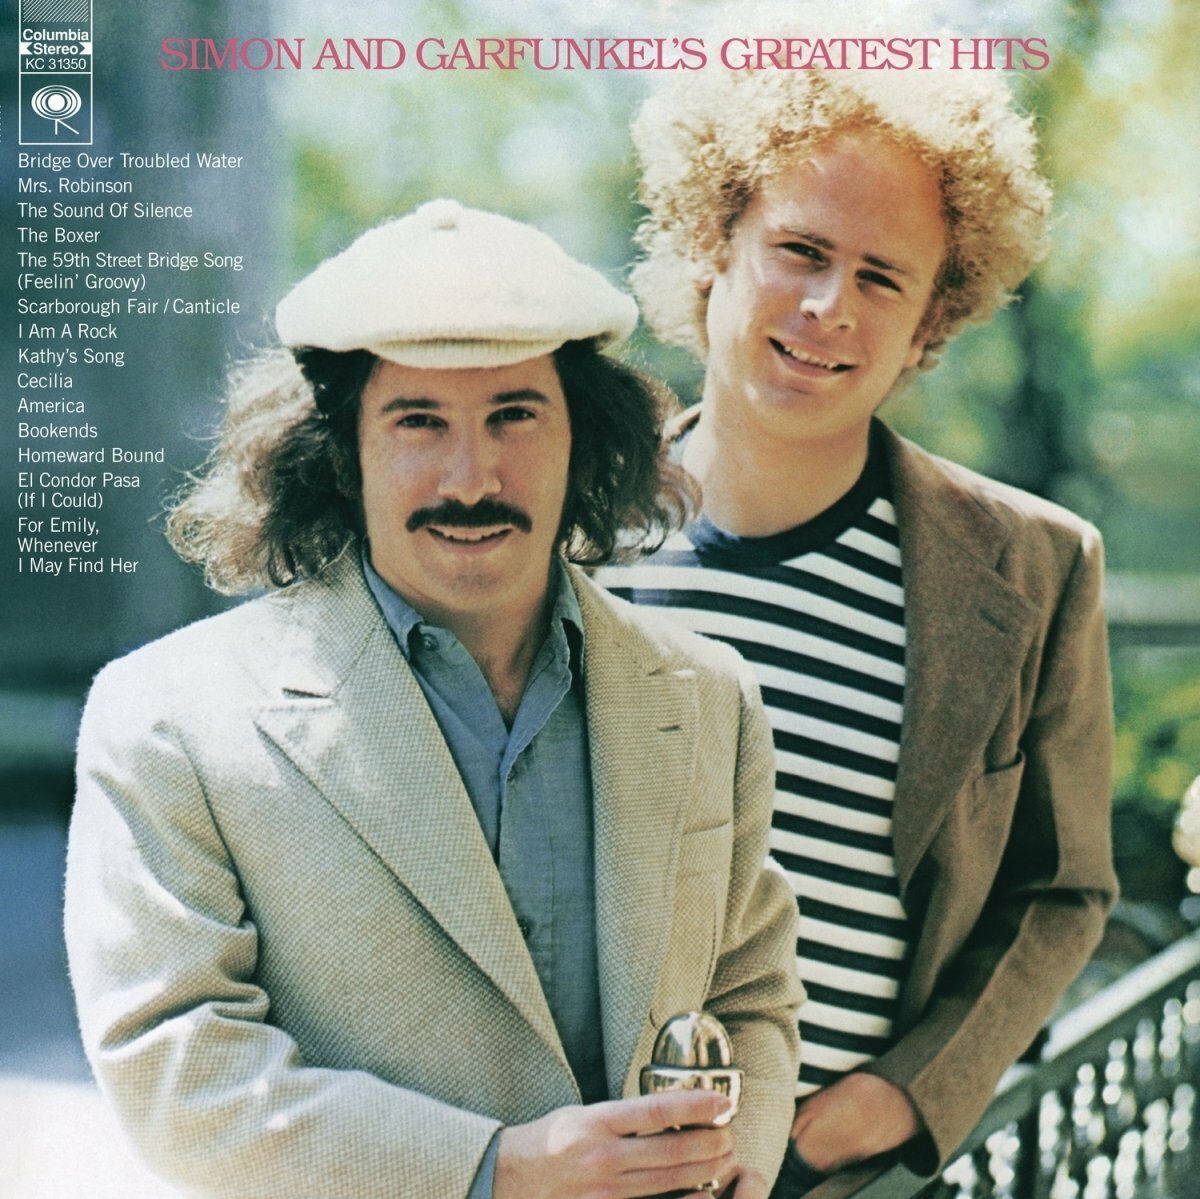 Simon & Garfunkel "Виниловая пластинка Simon & Garfunkel Greatest Hits"